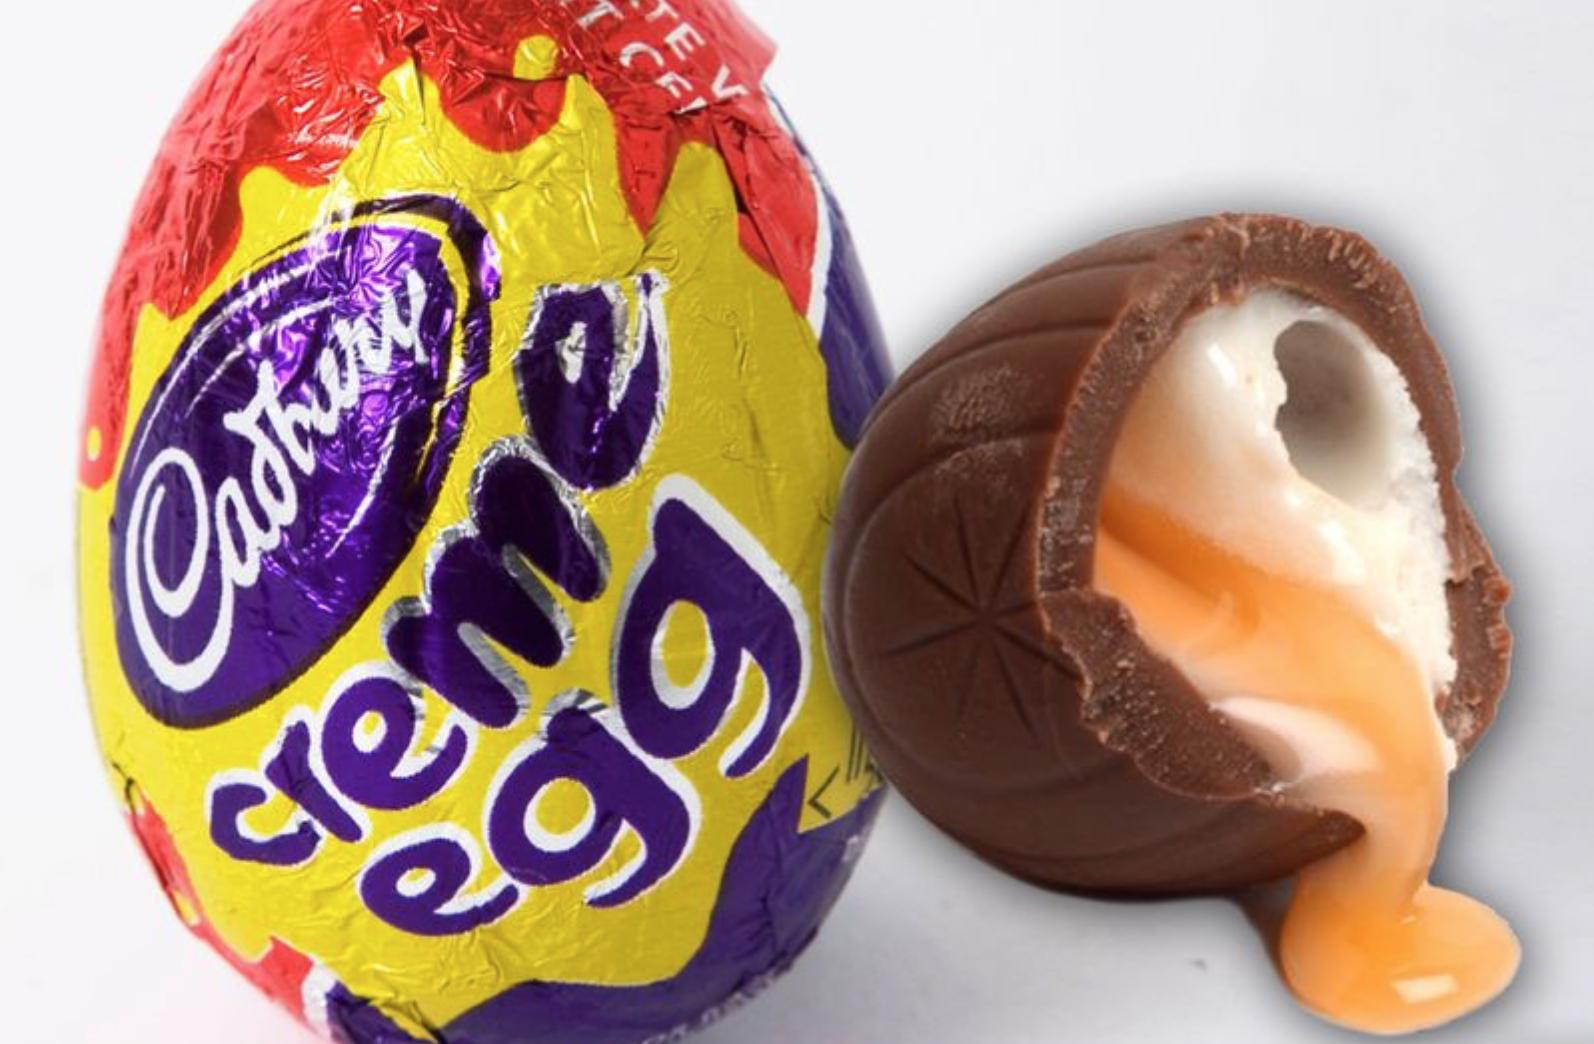 Cadbury Creme Egg. Cadbury's Creme Egg. Cadbur Cream EG. Cadbury Creme Egg Хэллоуин. Авпра овынрогерпо егг